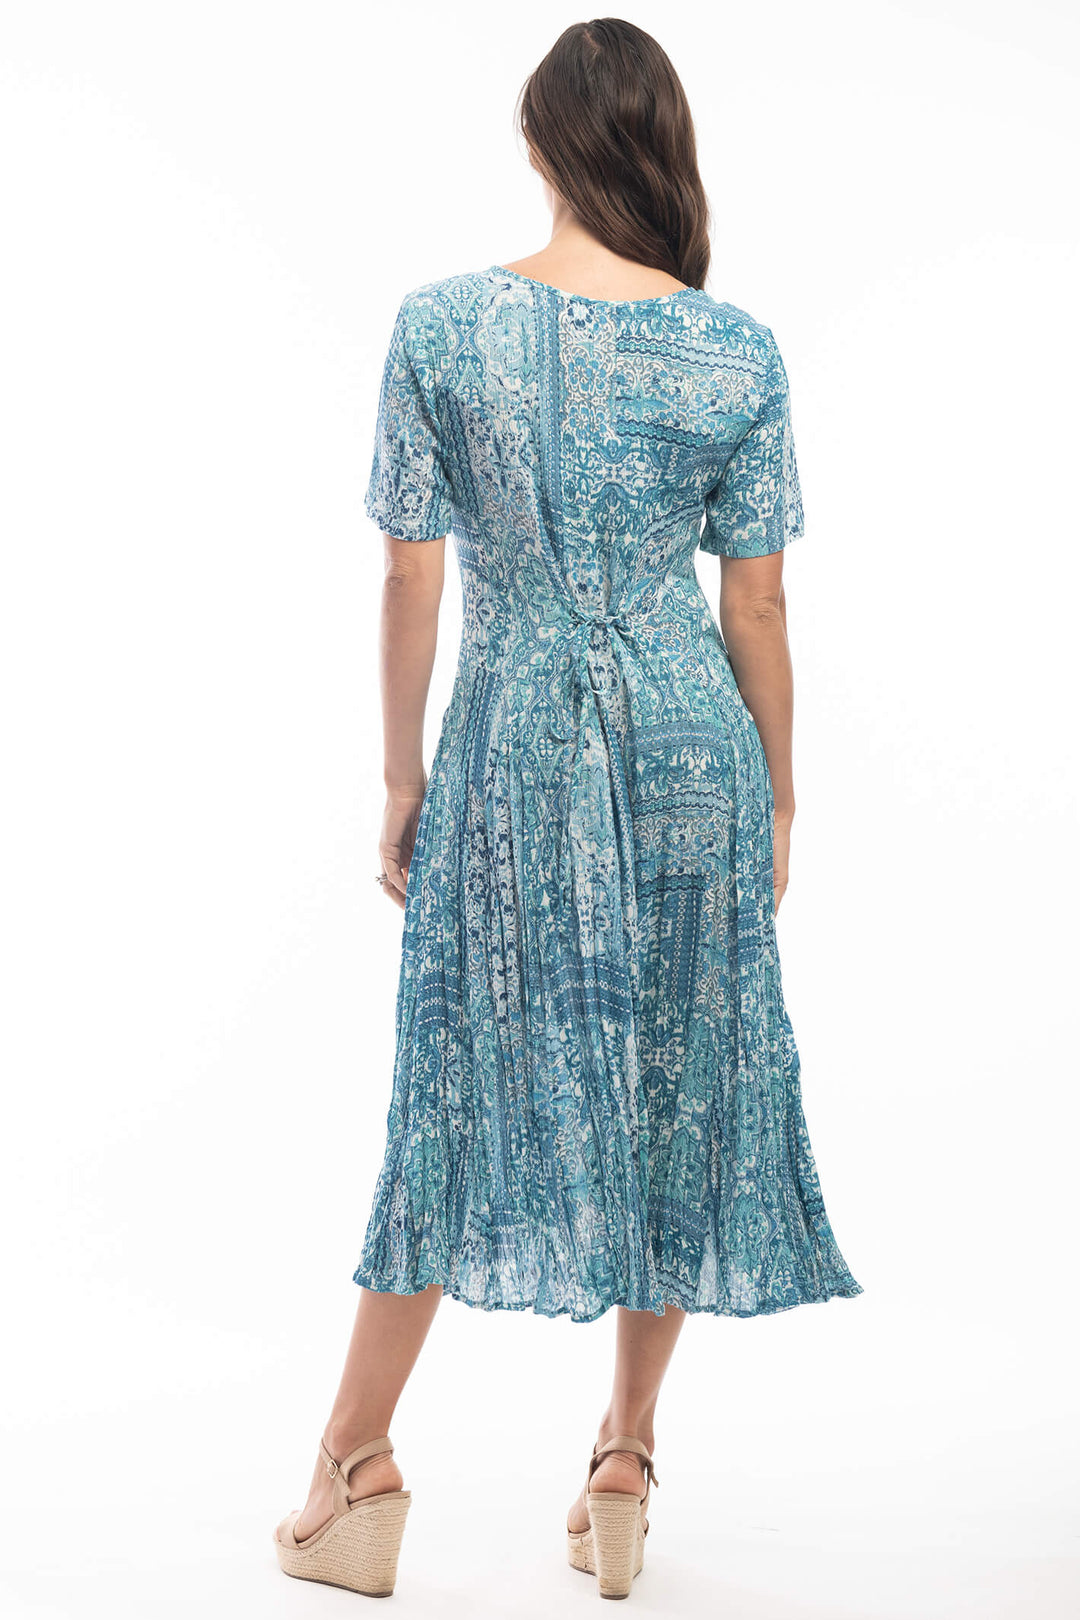 Orientique 4134 Blue Kotor Godet Sleeve Dress - Experience Boutique